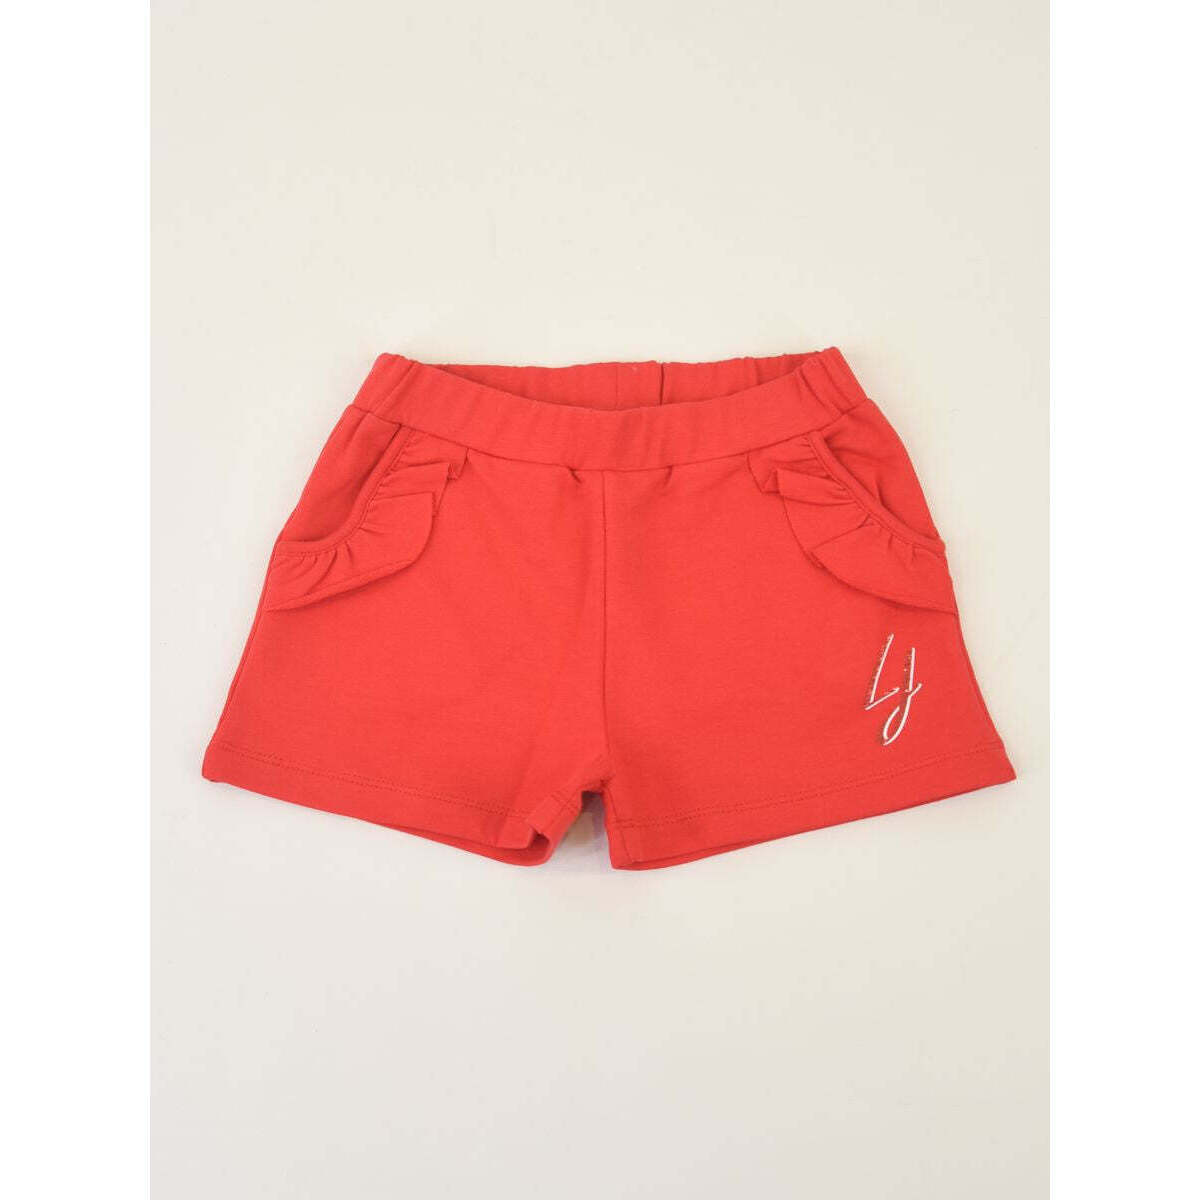 Vêtements Fille Shorts / Bermudas Liu Jo  Rouge